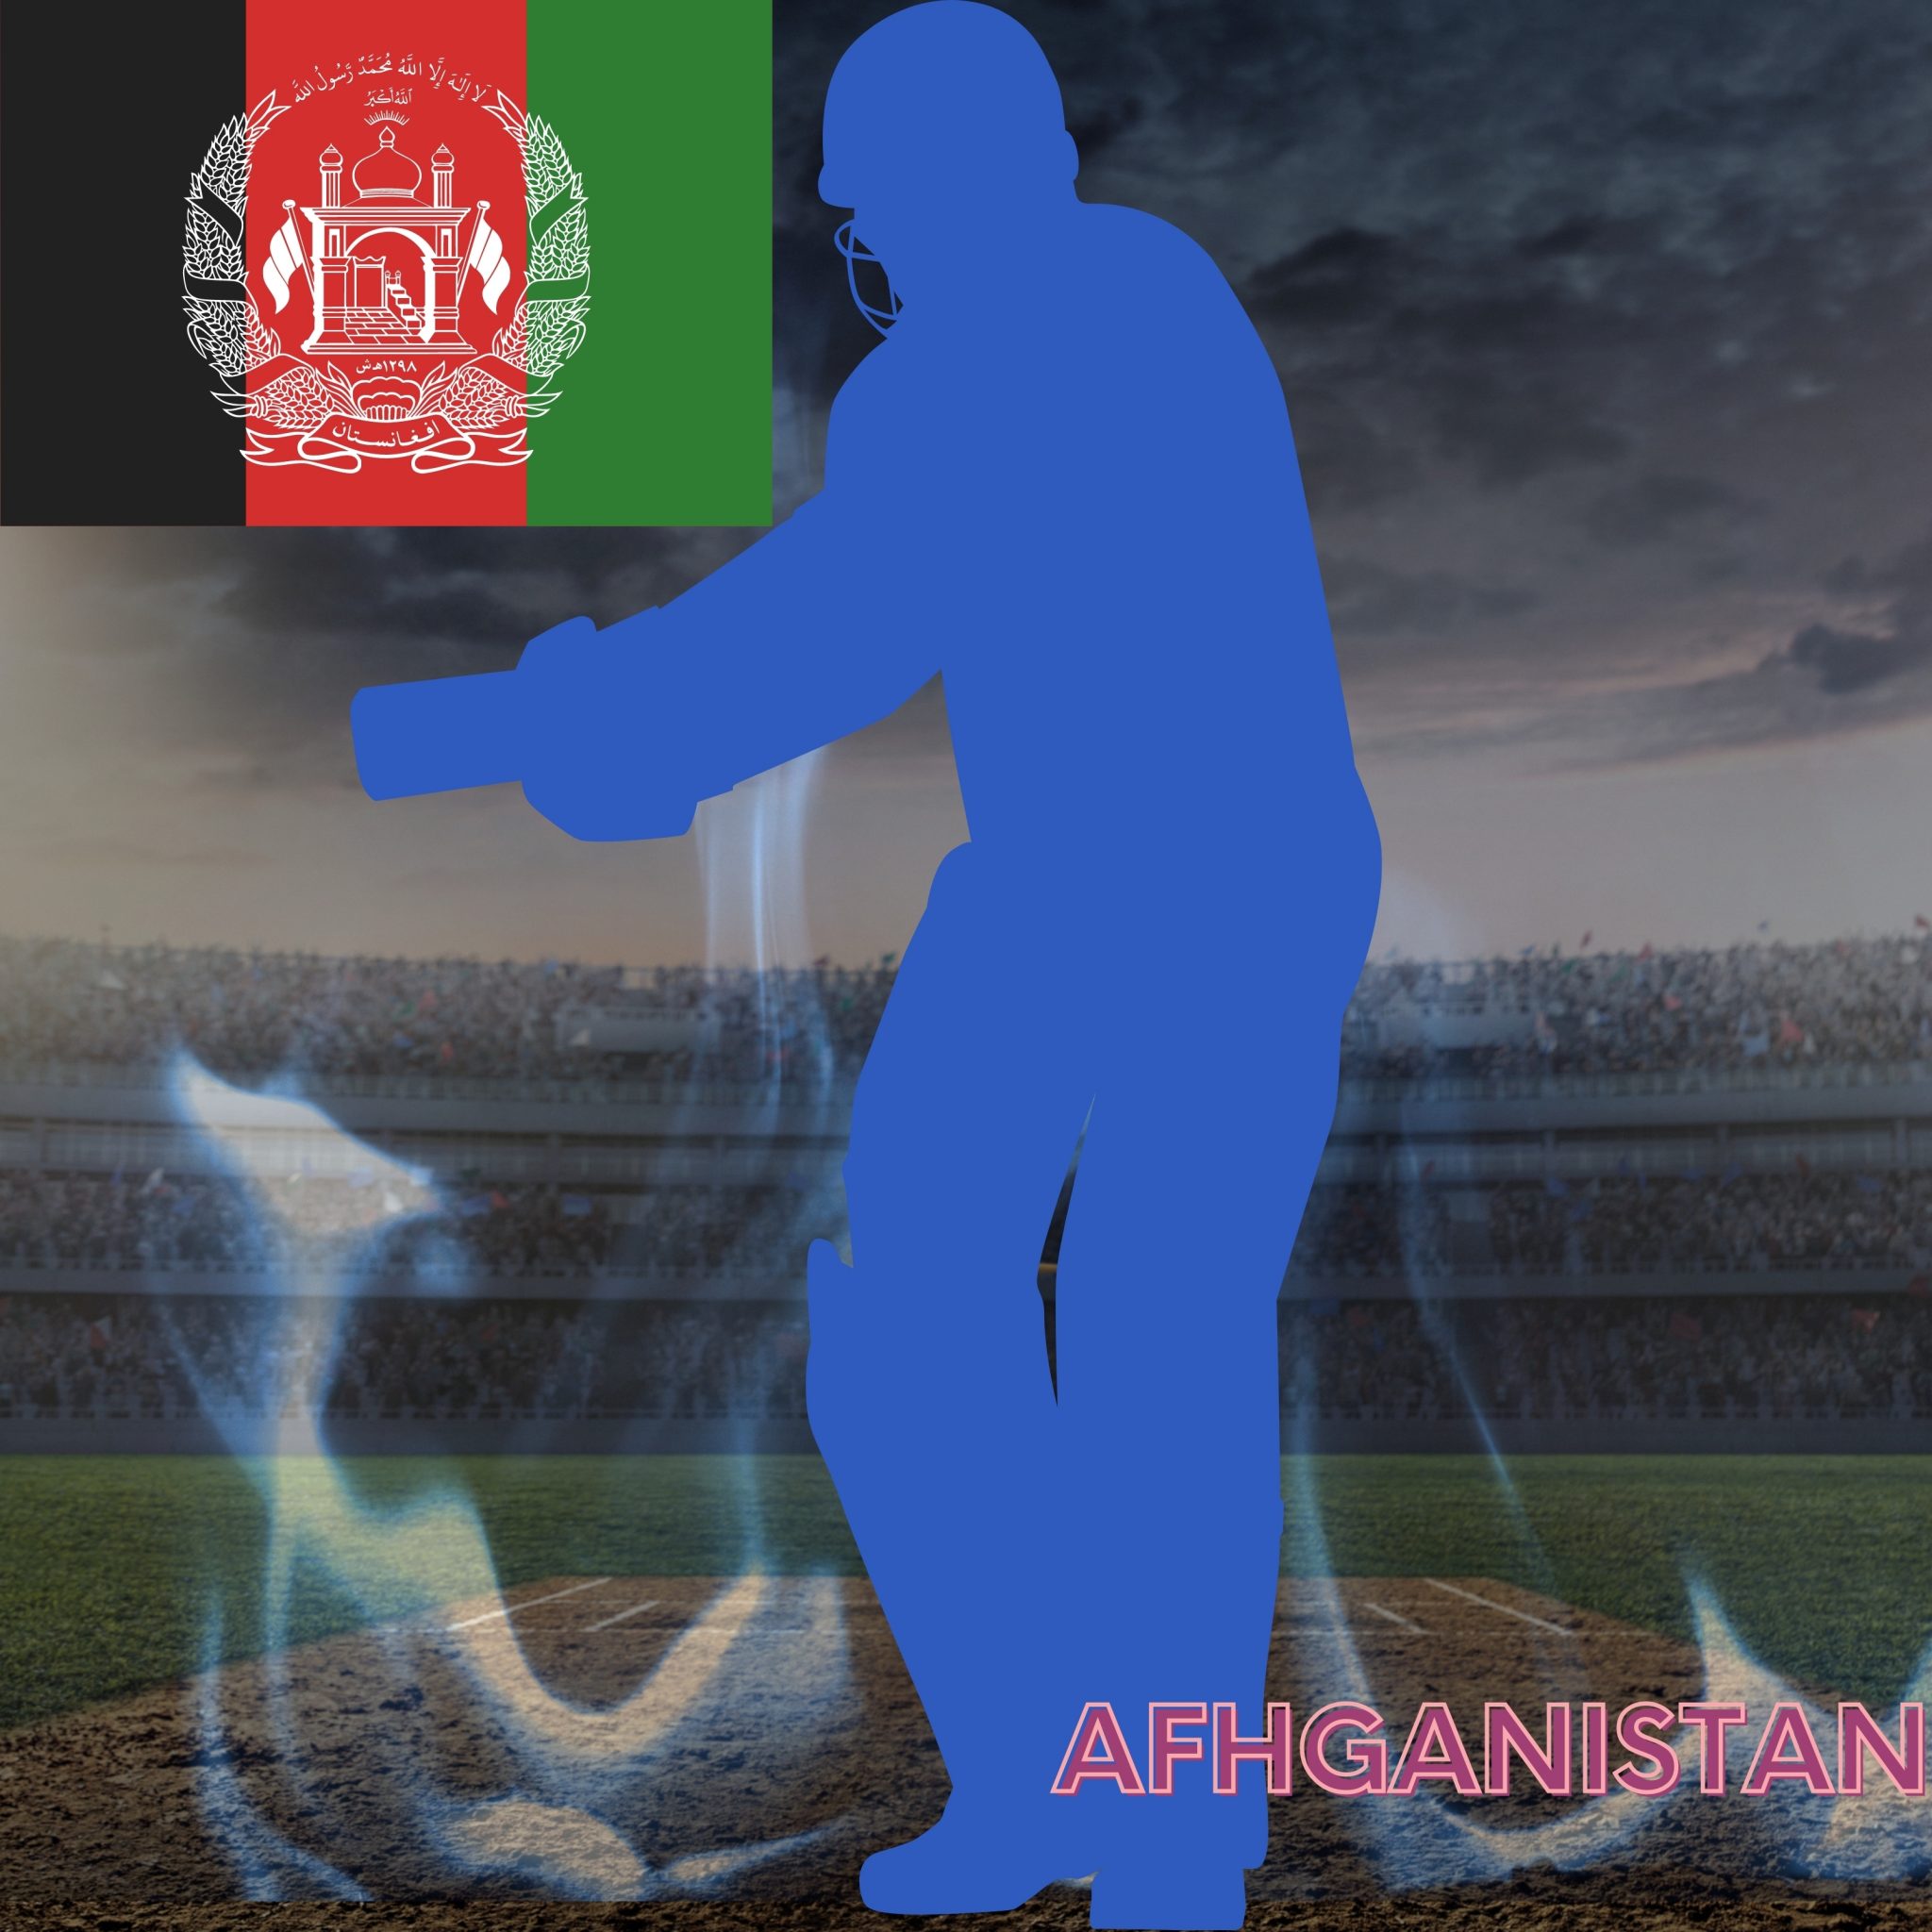 2048x2048 wallpapers iPad retina Afhganistan Cricket Stadium iPad Wallpaper 2048x2048 pixels resolution